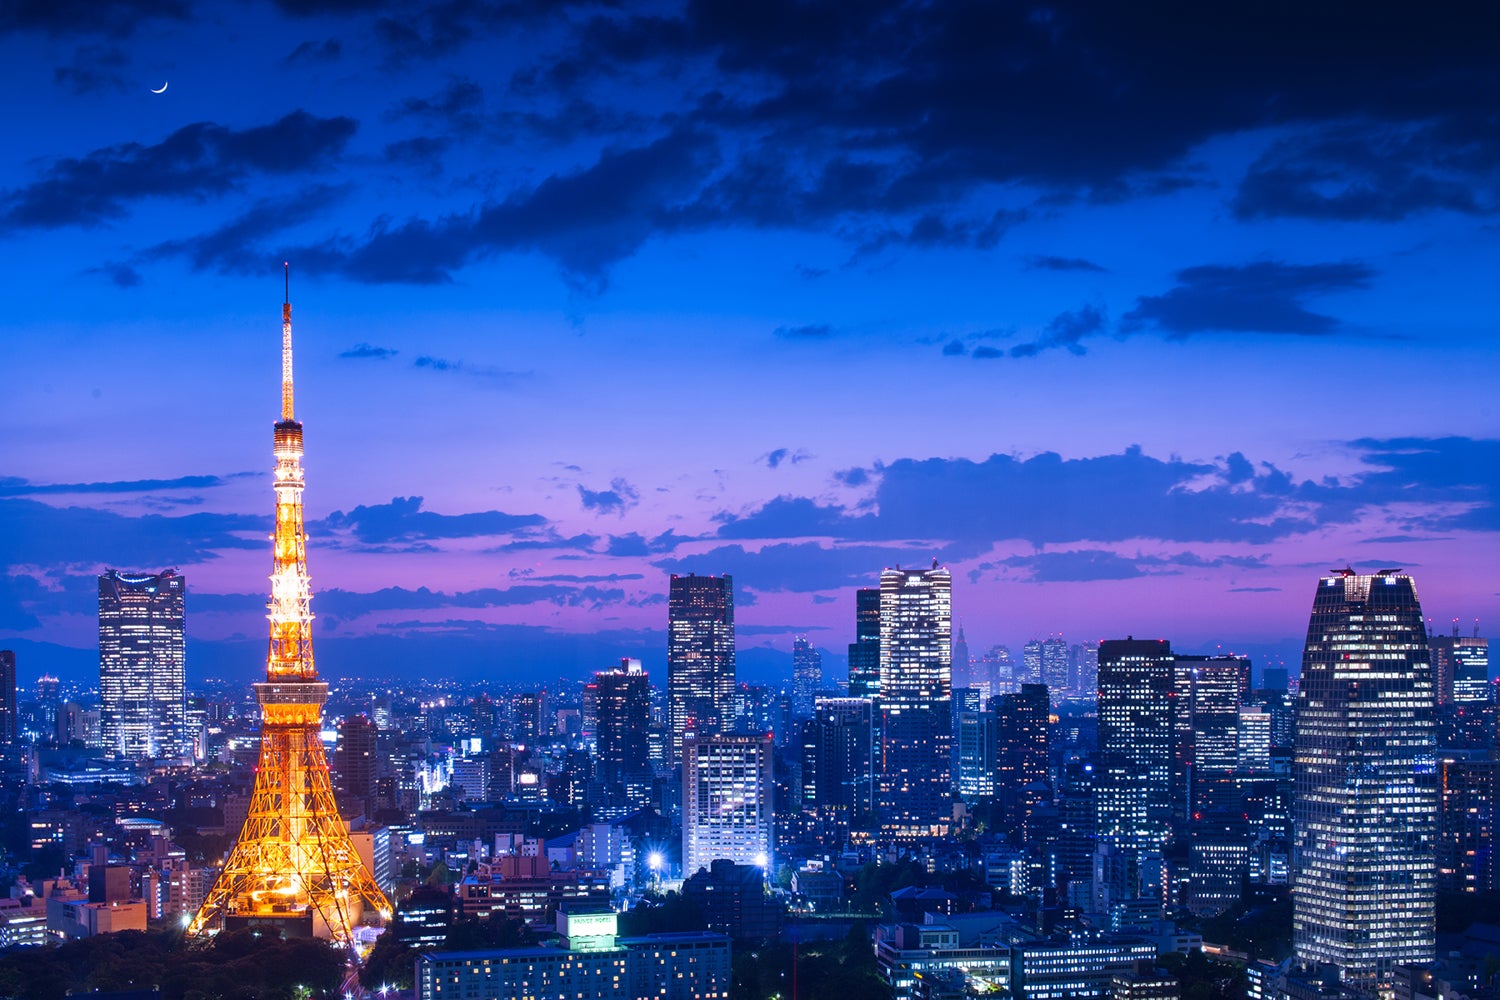 Tokyo Tower HD wallpapers free download | Wallpaperbetter